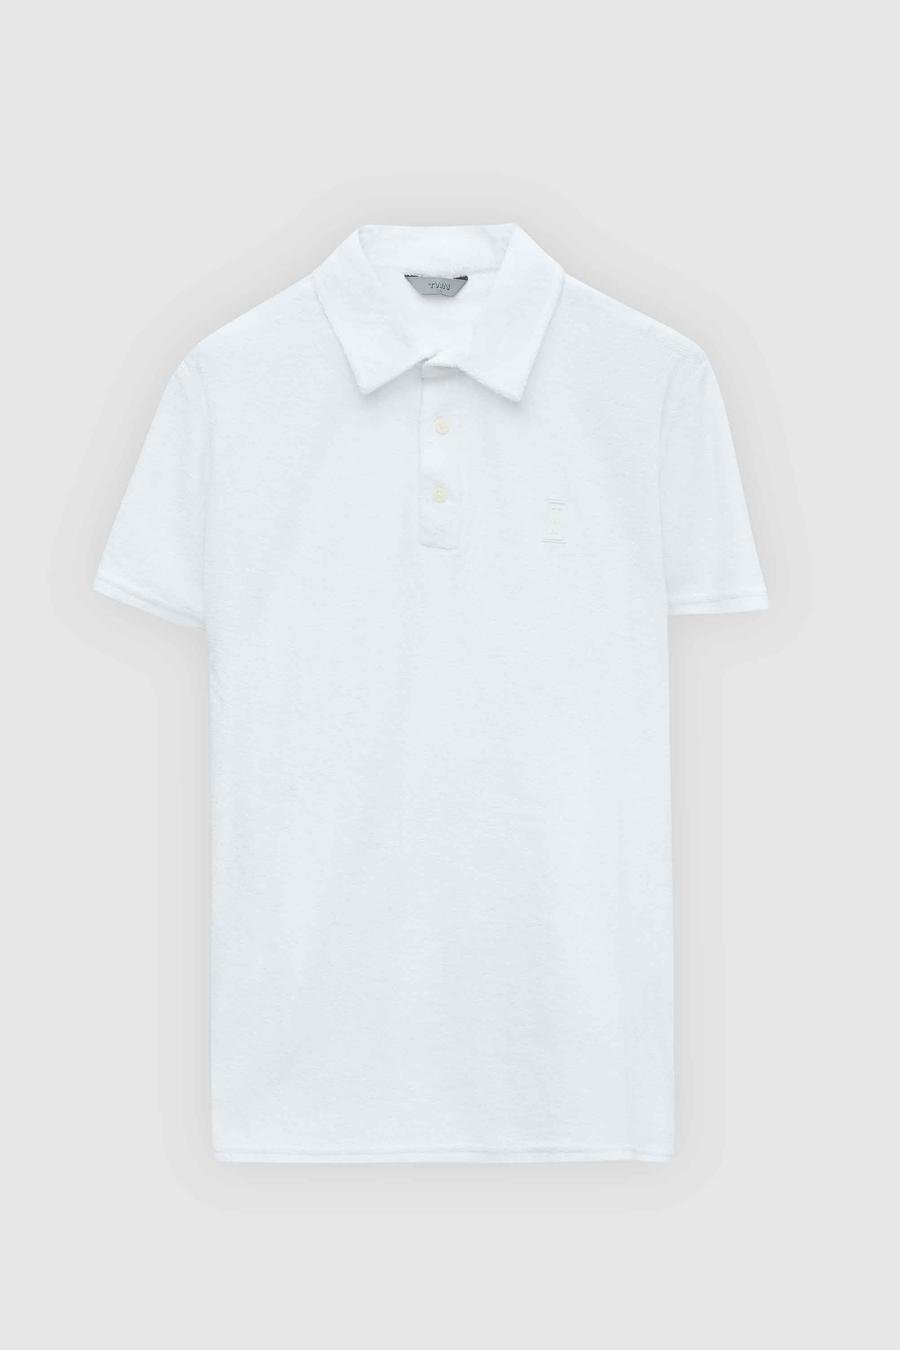 Twn Slim Fit Beyaz Düz Örgü T-Shirt - 8683925095195 | D'S Damat